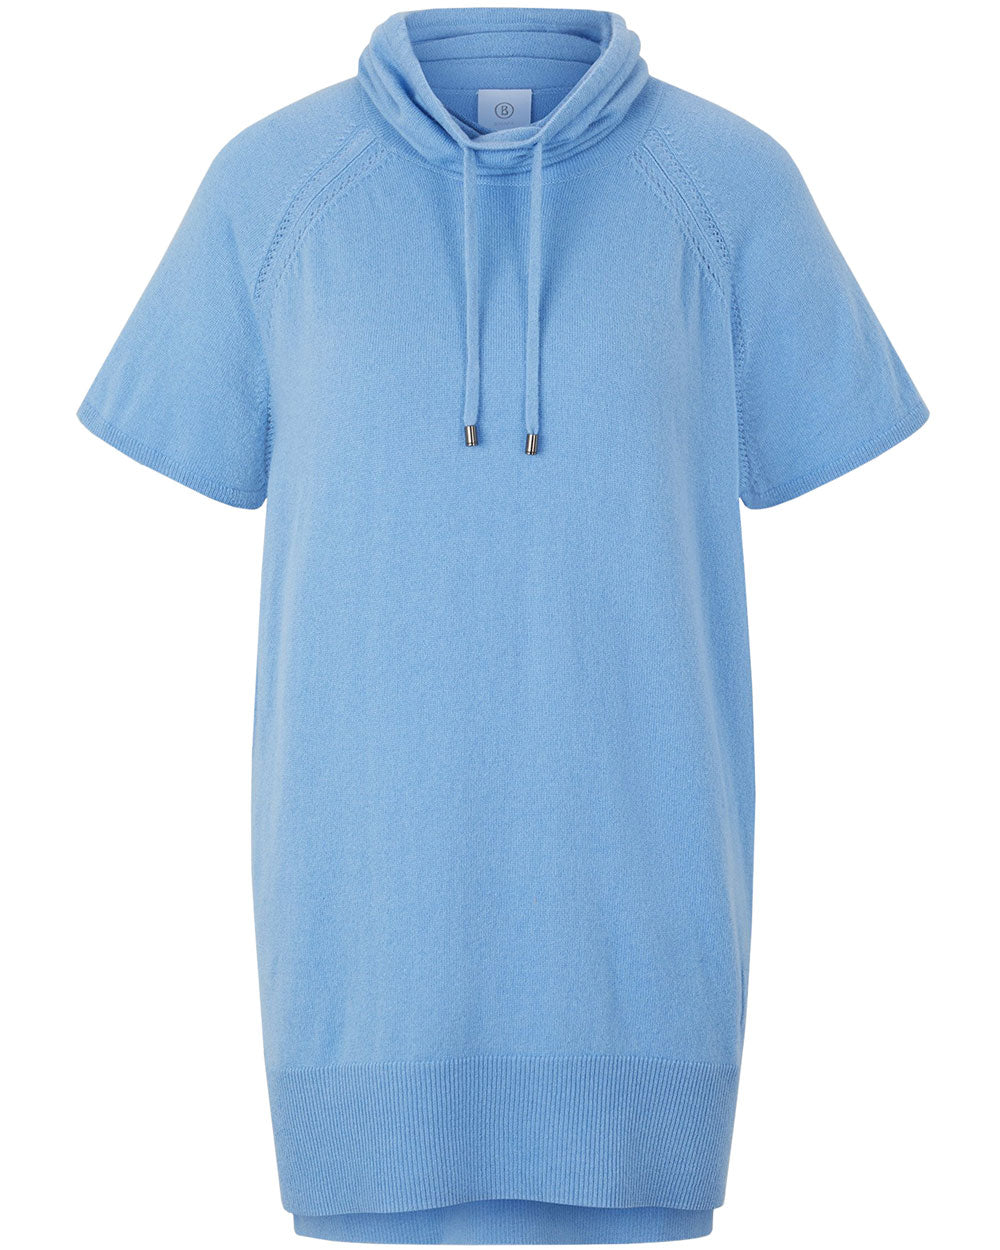 Spring Blue Short Sleeve Sweater Dress